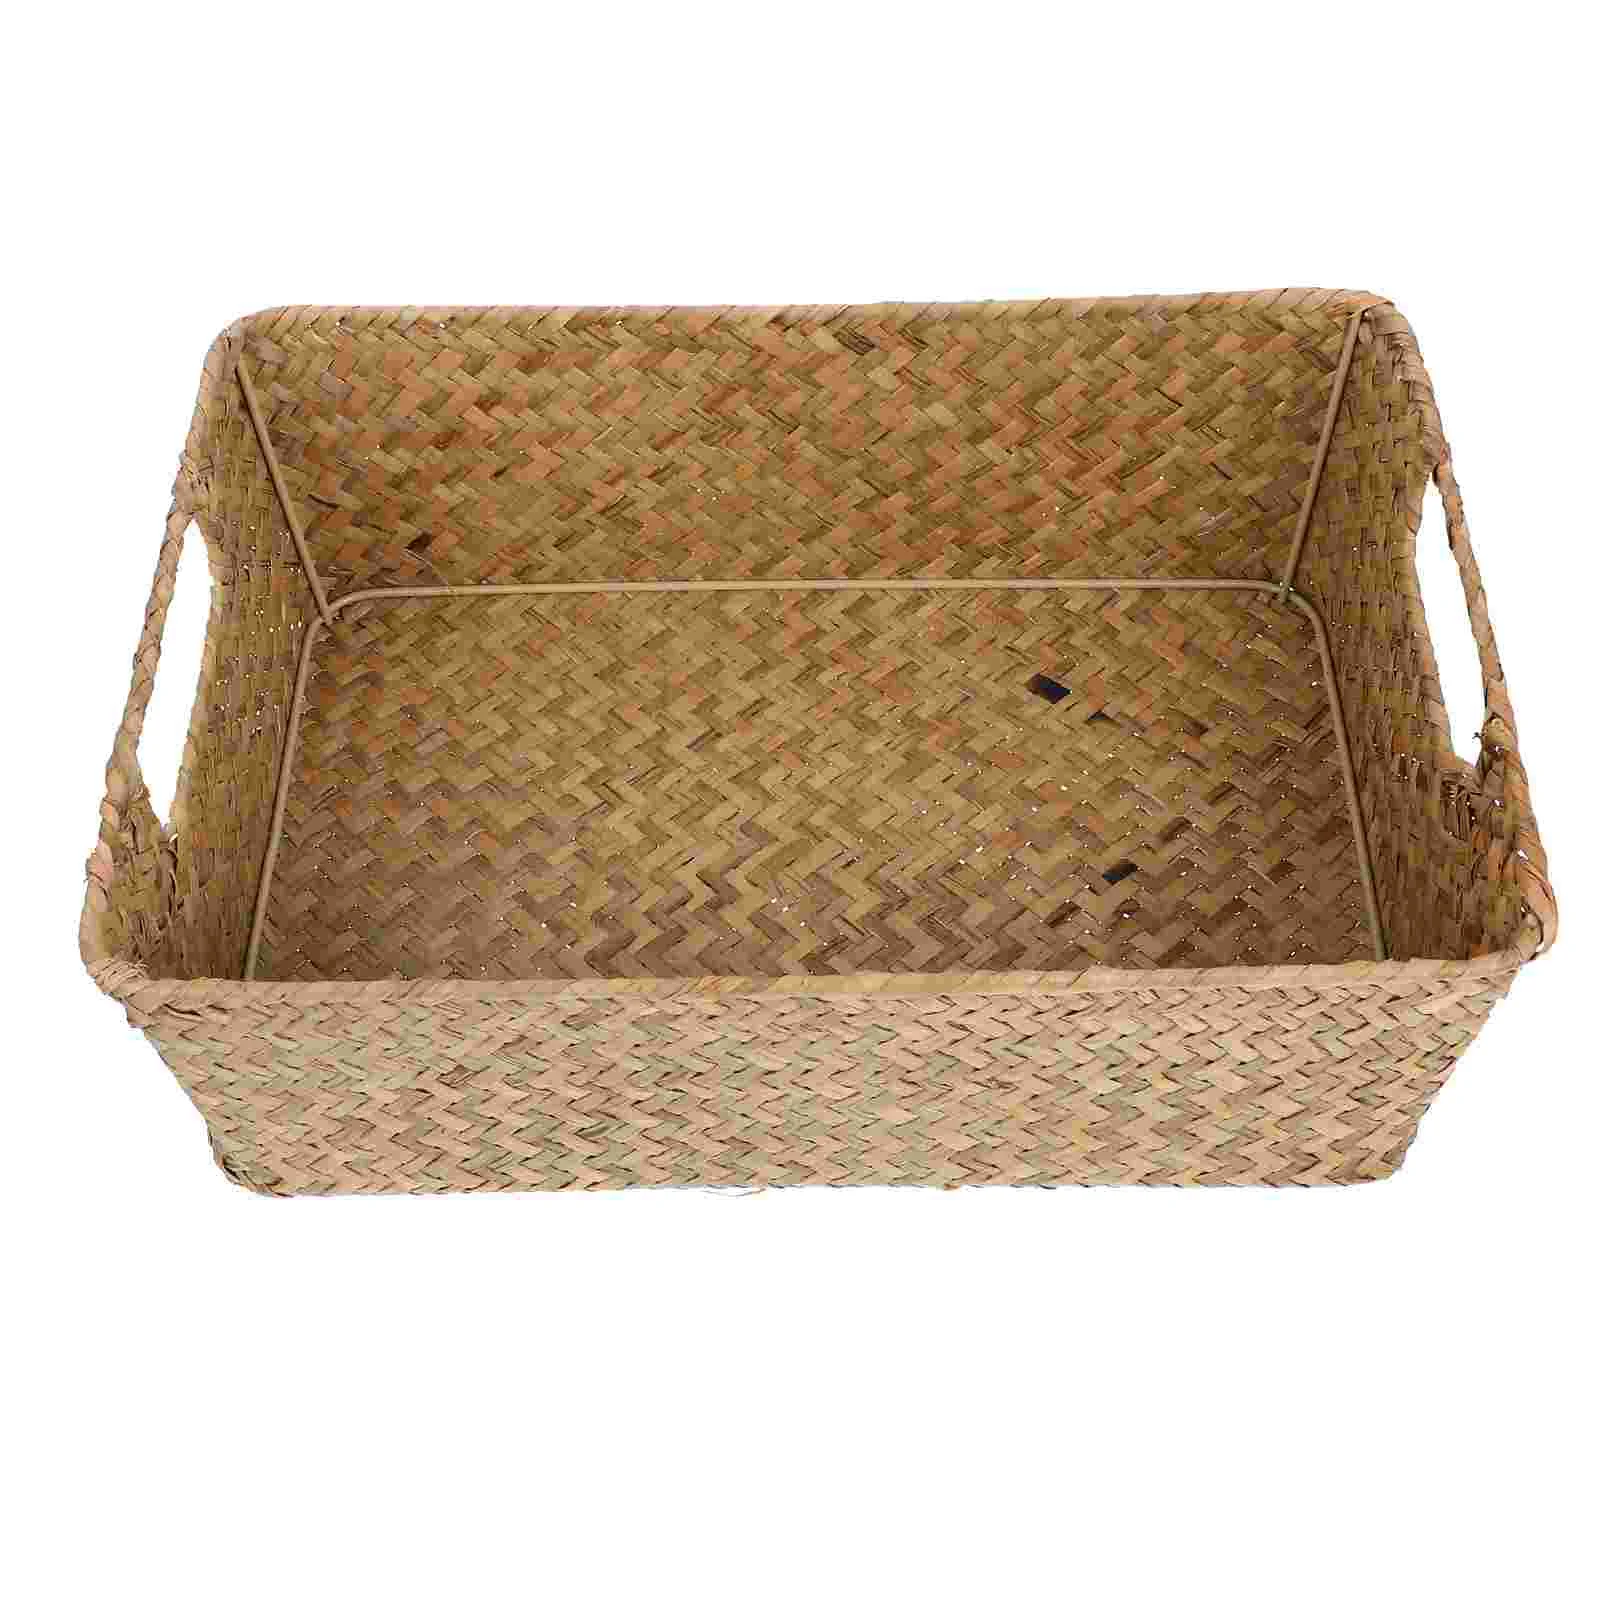 

Kitchen Storage Box Washing Basket Vegetable Sundries Organizing Woven Bread Container Mat Grass